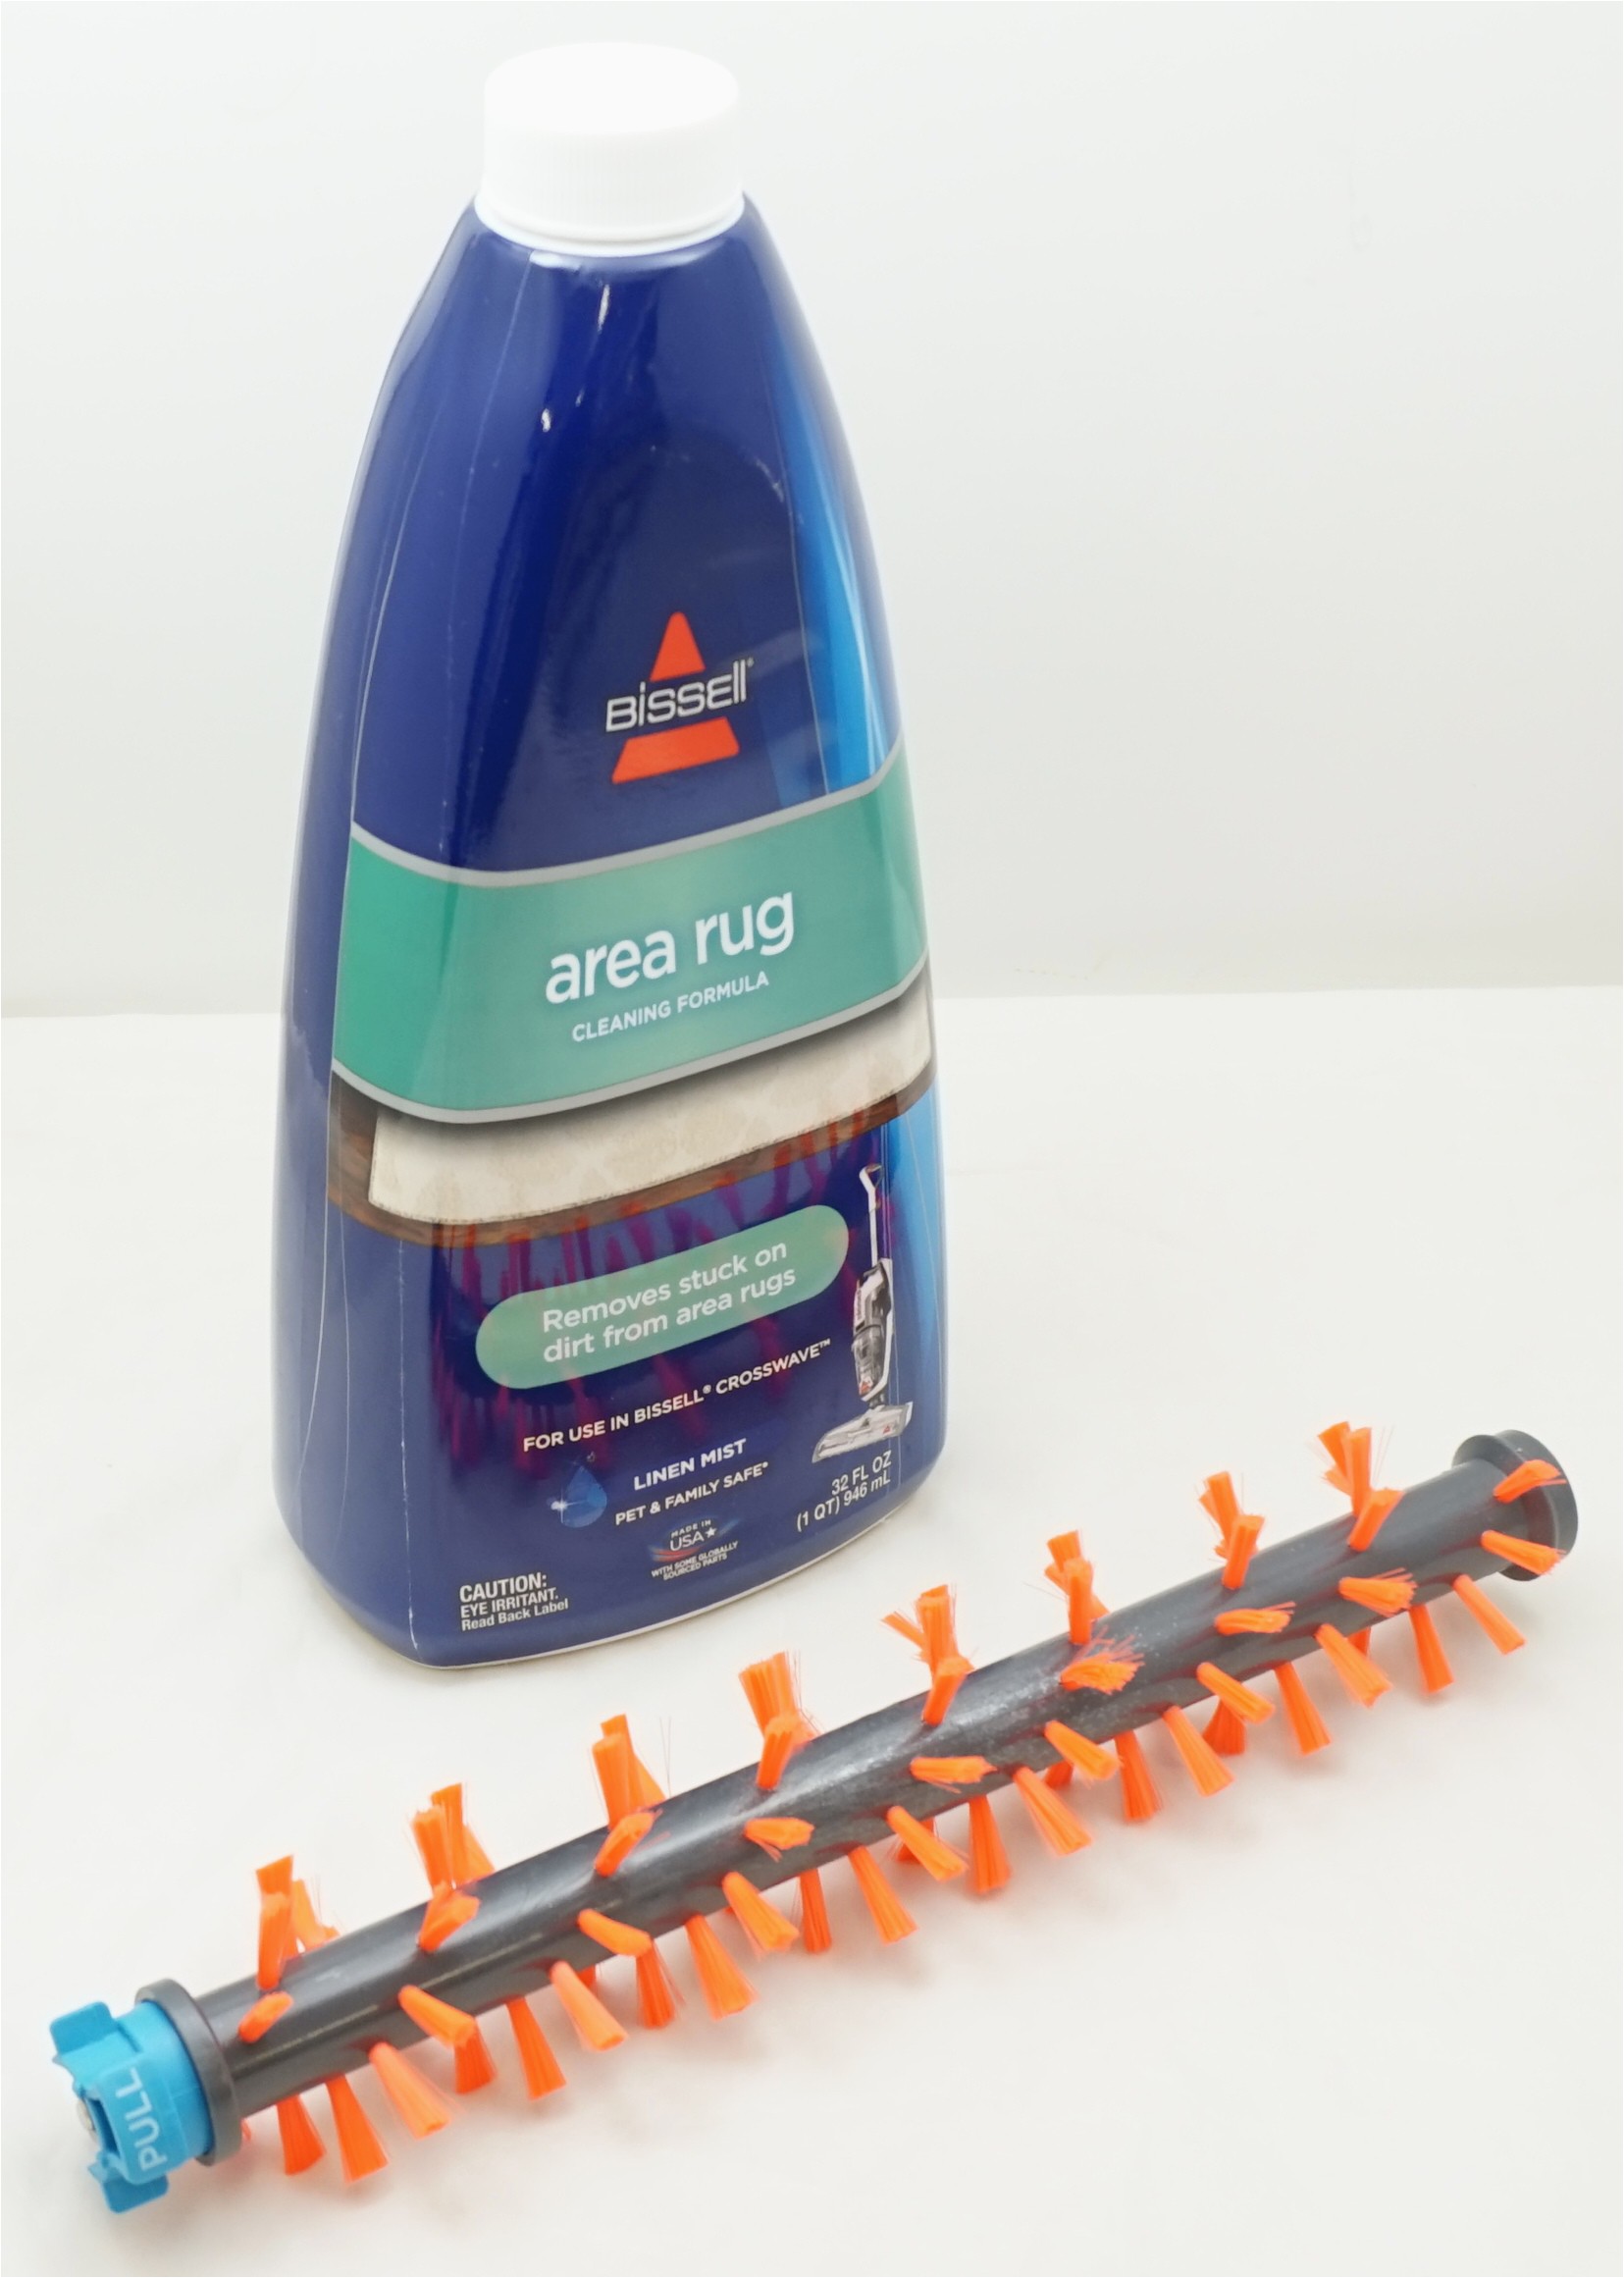 Bissell Crosswave area Rug Cleaner Bissell Crosswave 32oz area Rug Cleaning formula & ares Rug Brush Roll Walmart